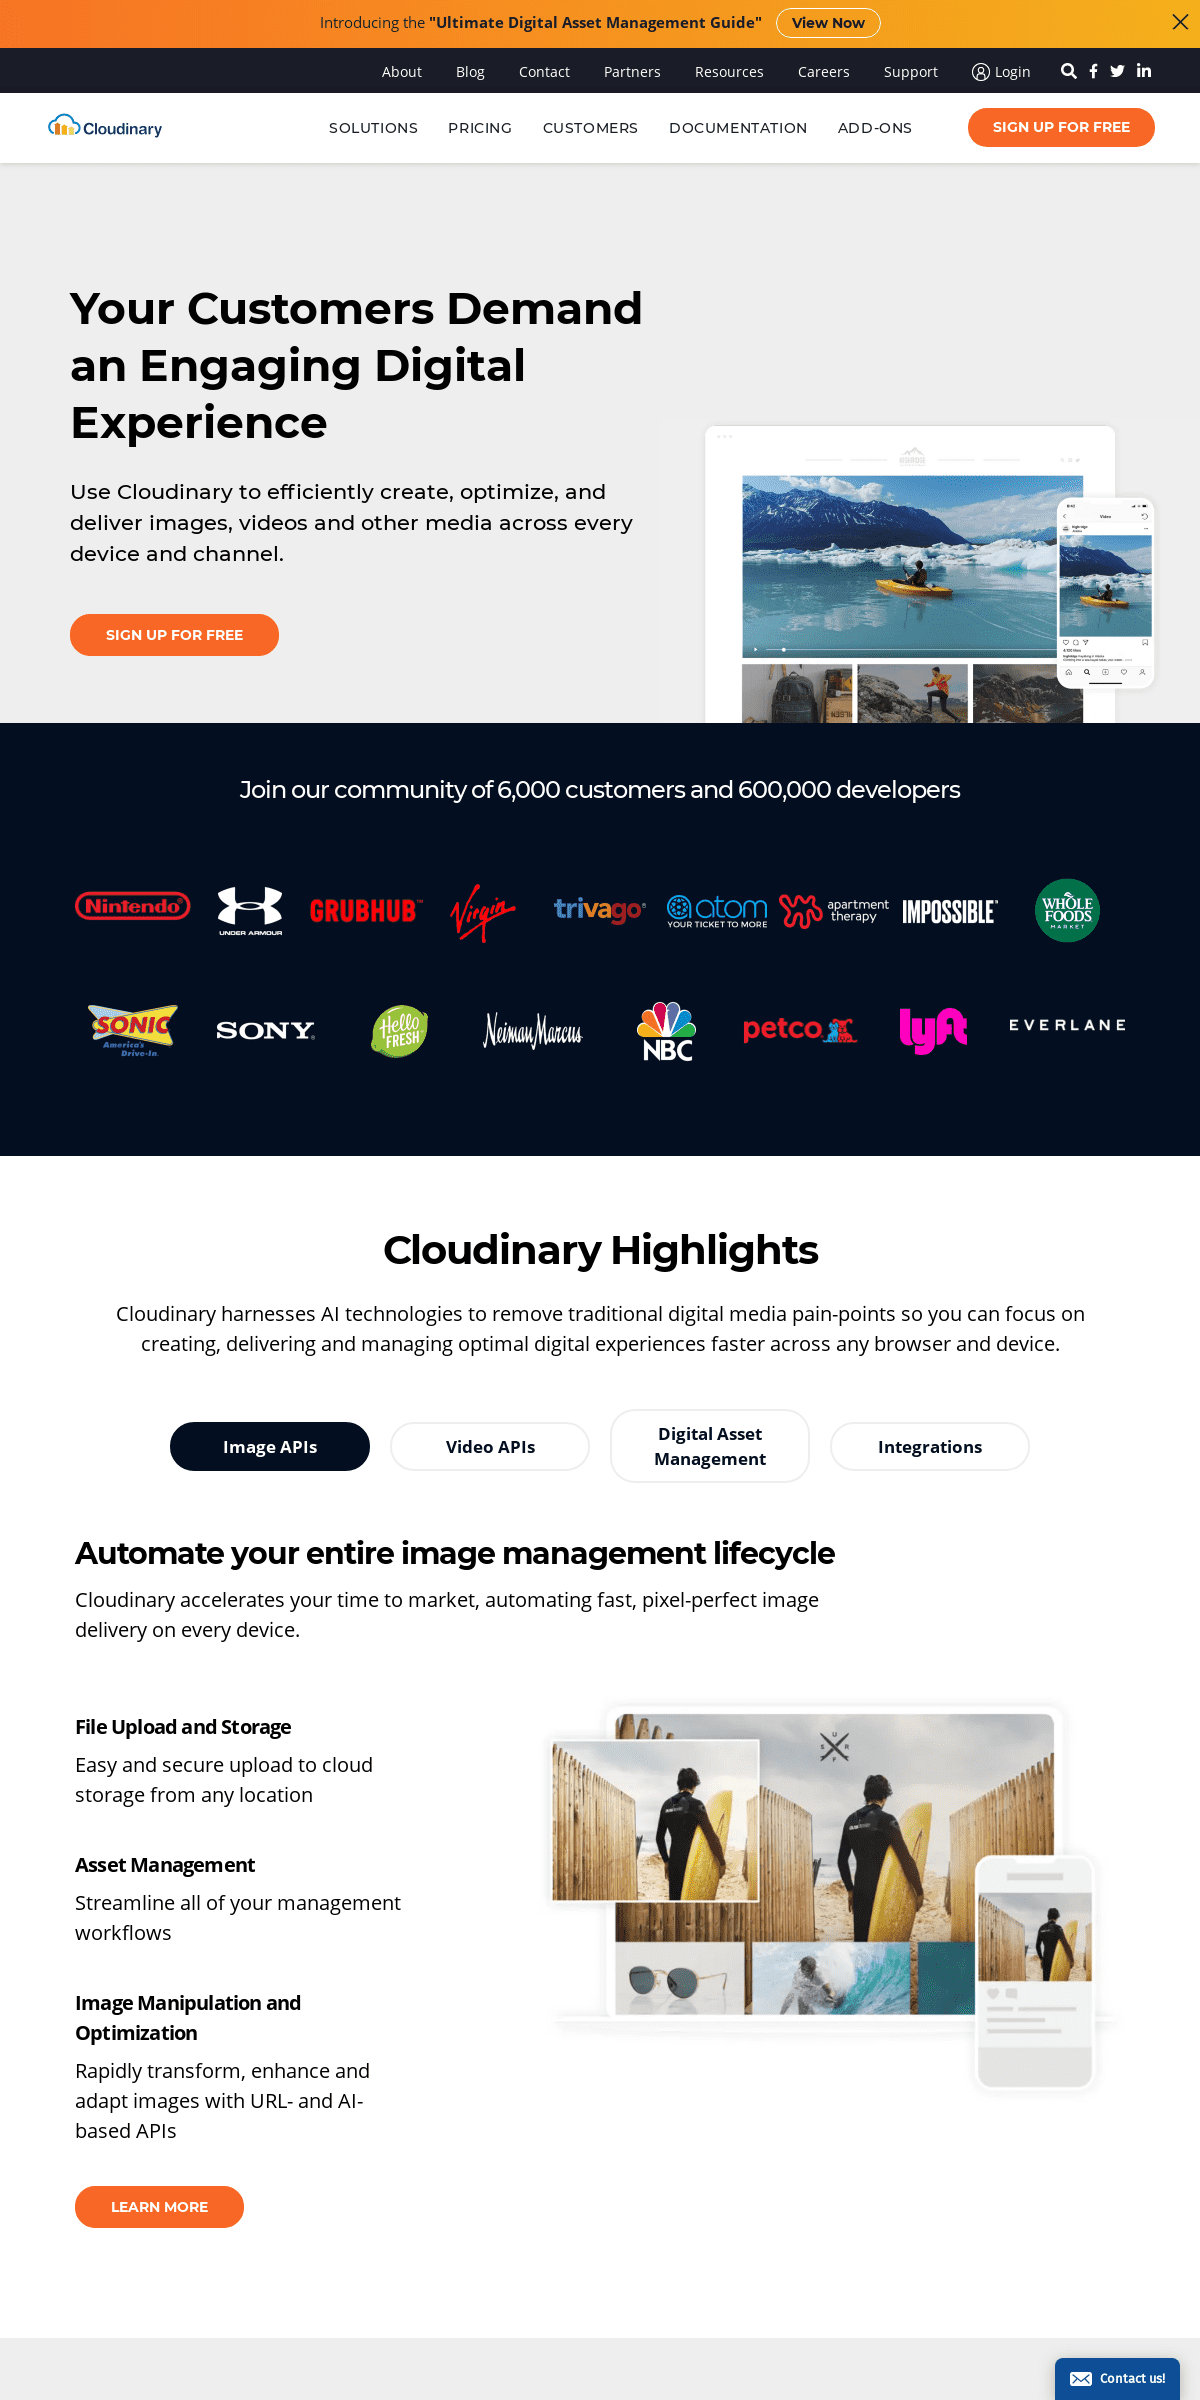 A complete backup of cloudinary.com